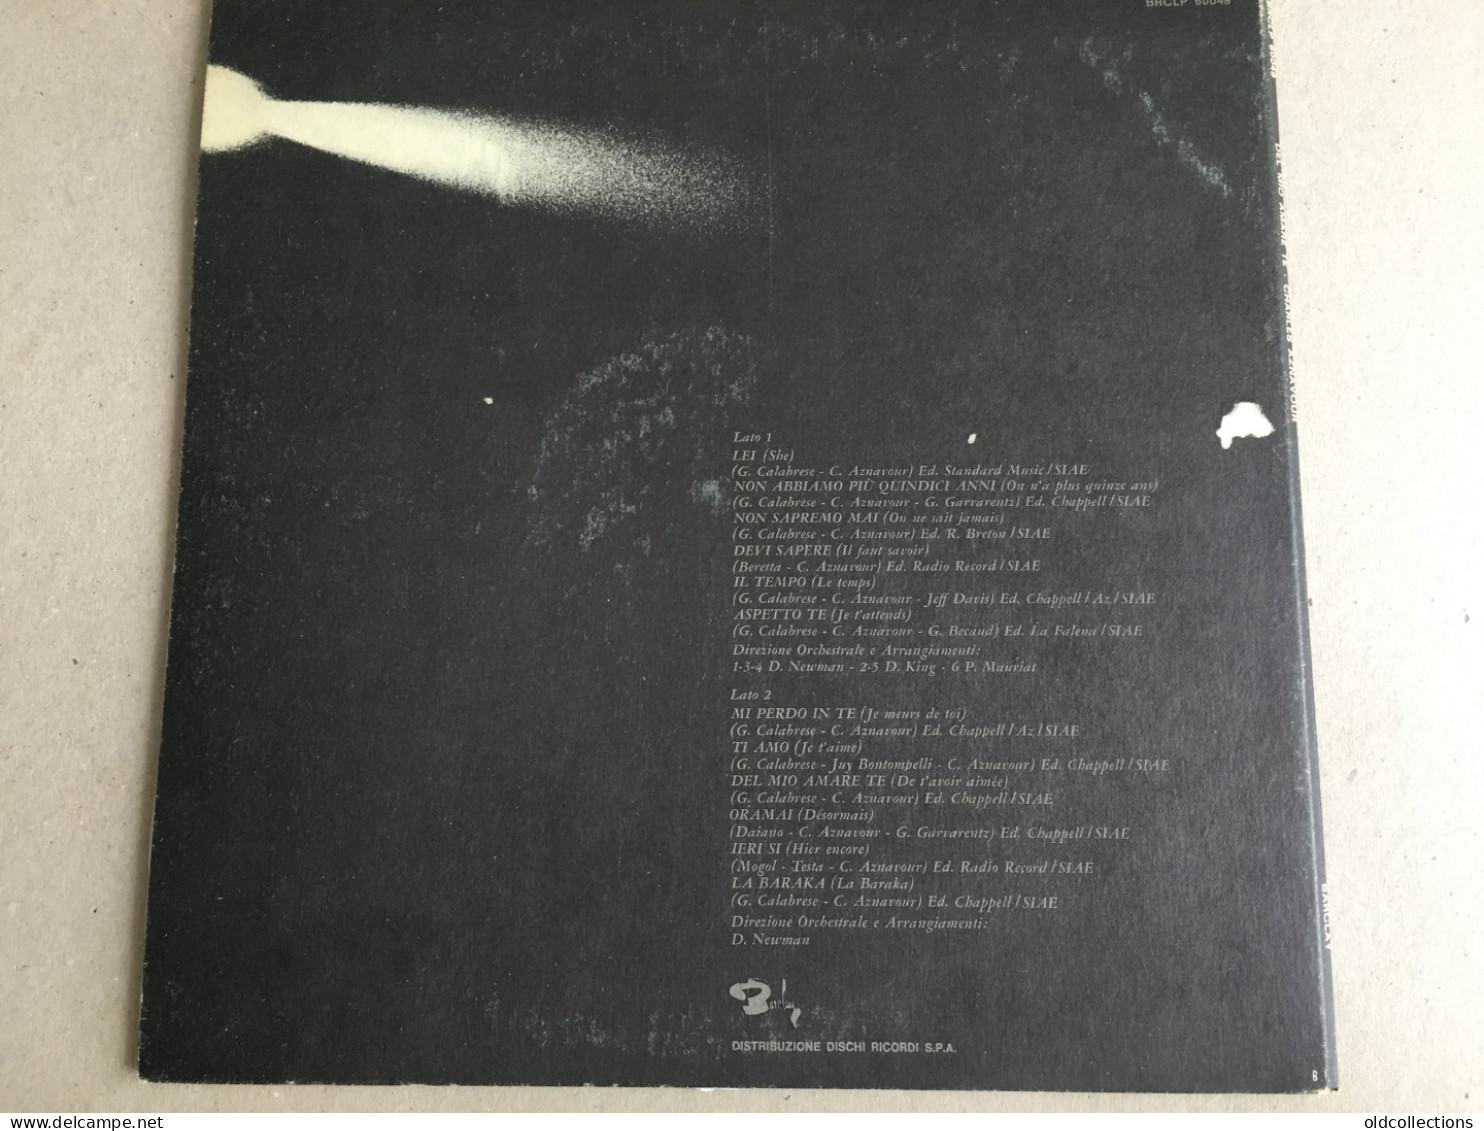 Schallplatte Vinyl Record Disque Vinyle LP Record - Charles Aznavour Del Mio Amare Te - Vinyl + Album Photo - Otros - Canción Italiana